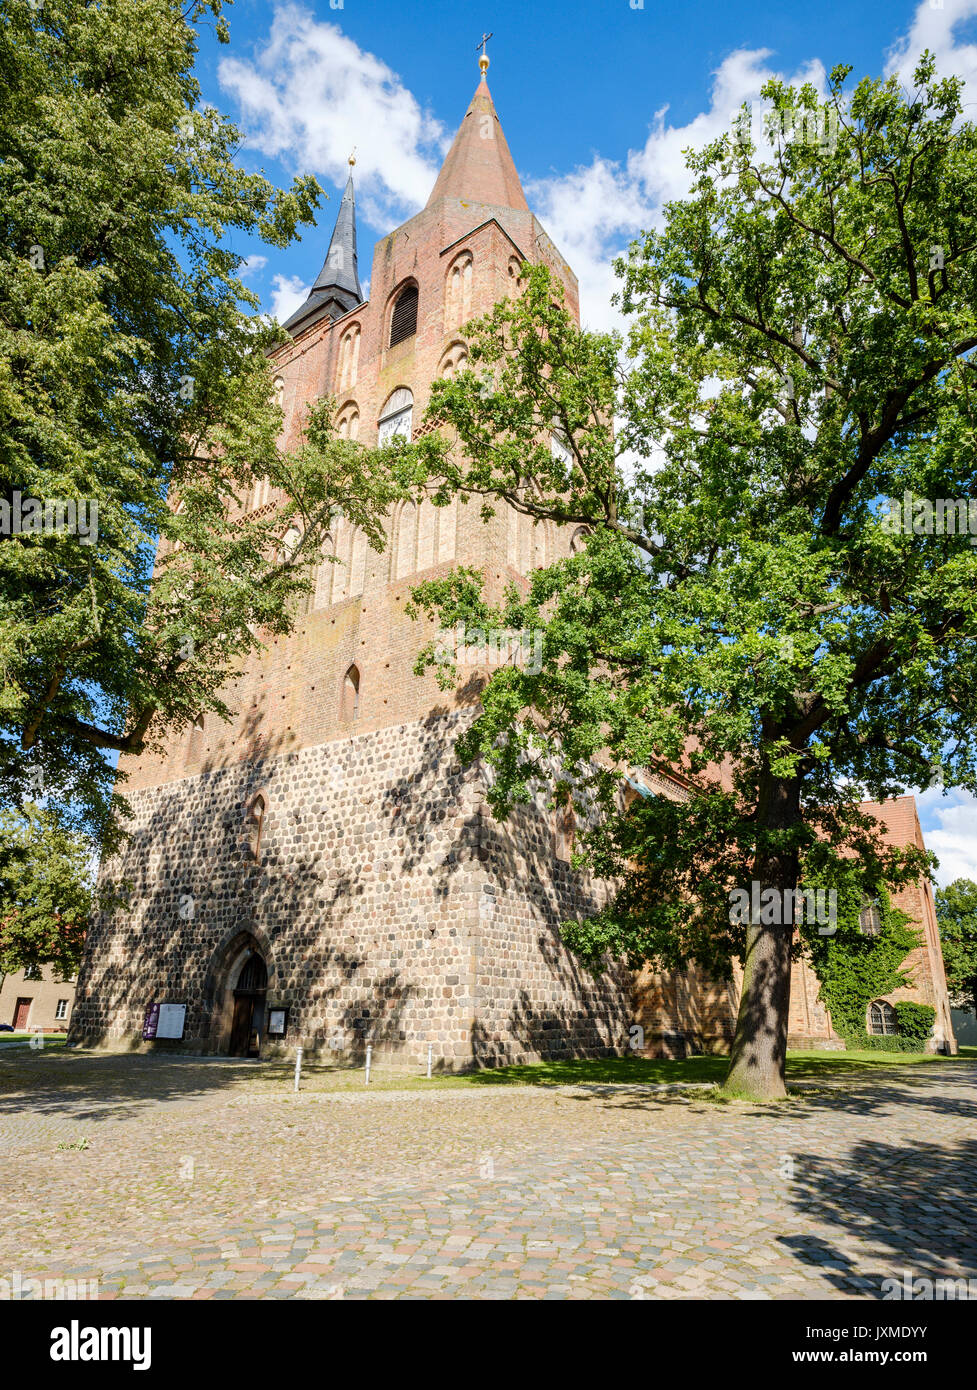 Stadtkirche St. Marien, Gransee, Brandenburg, Germany Stock Photo